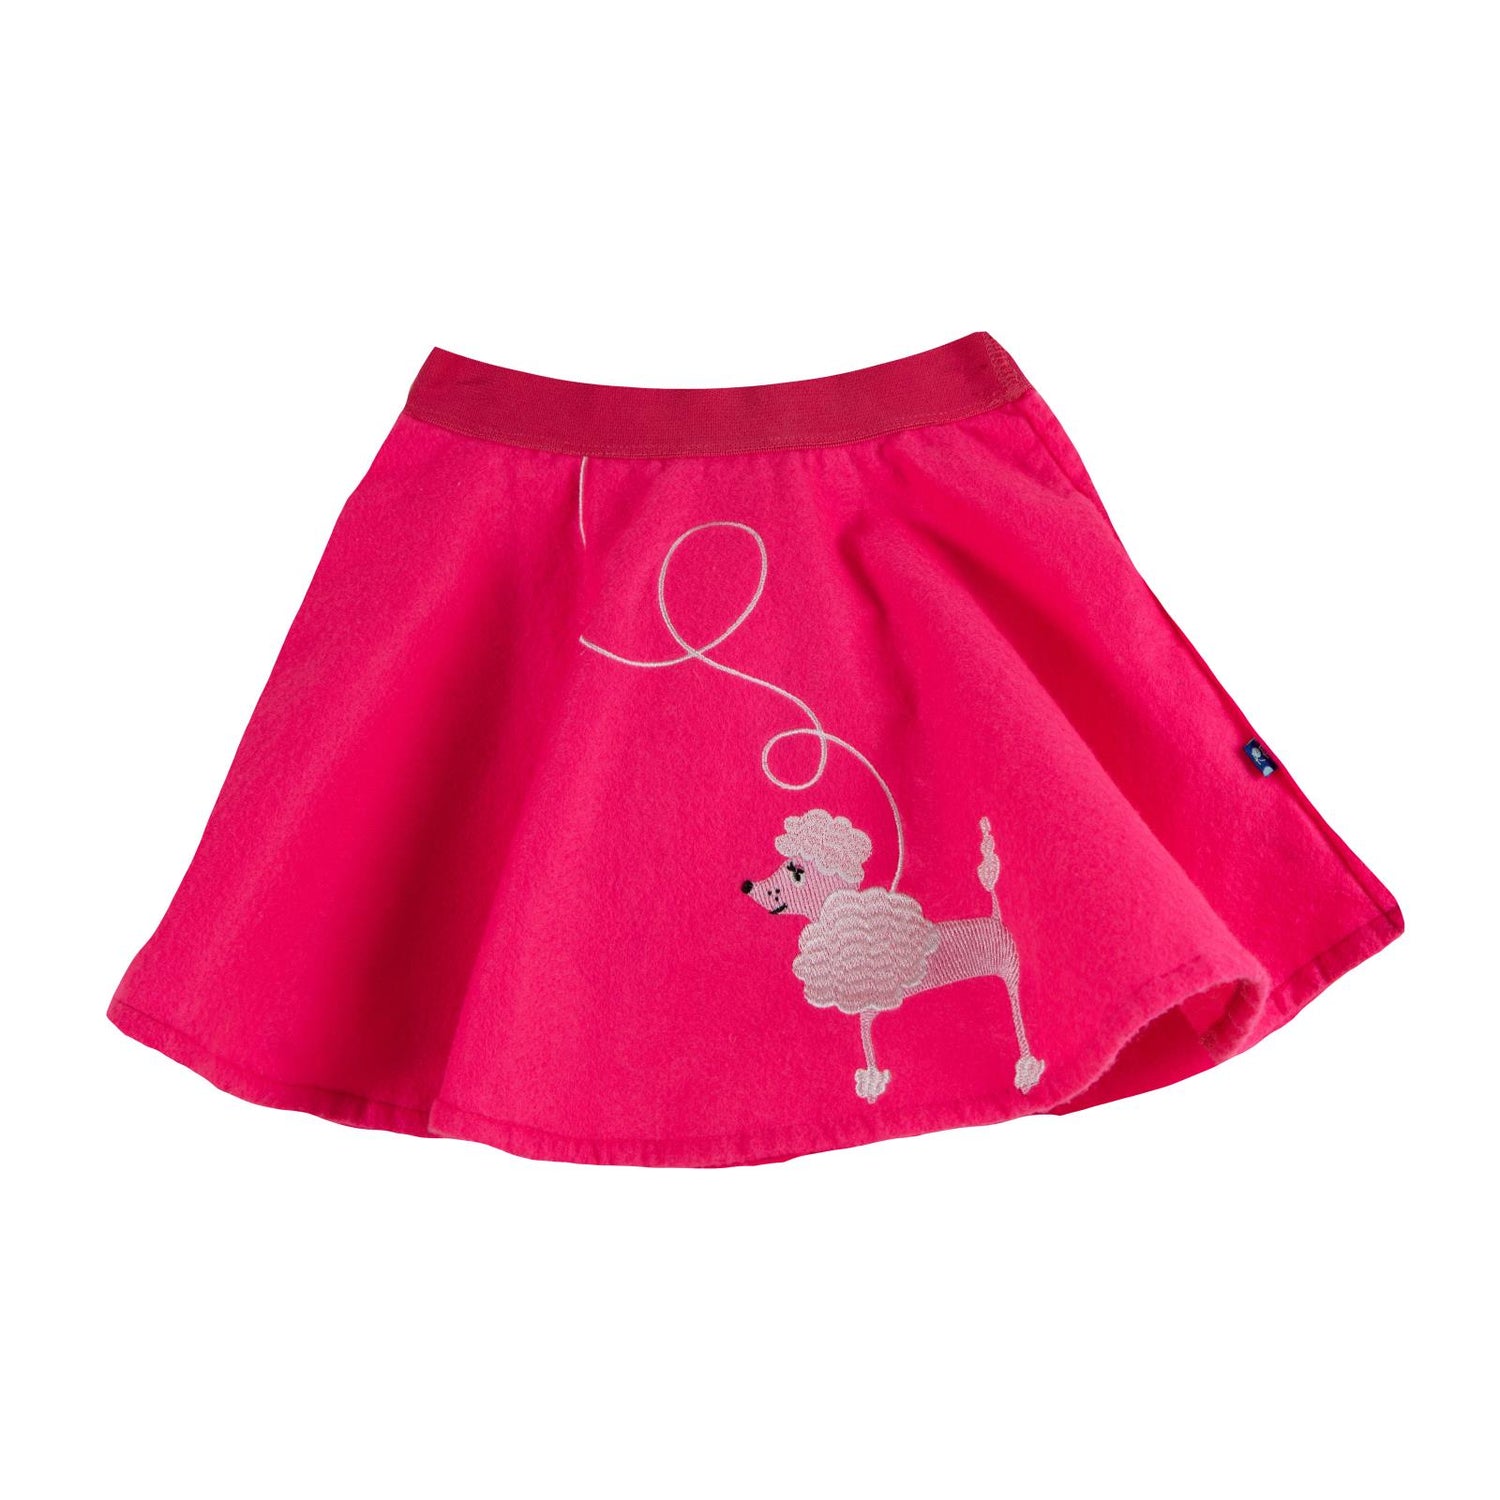 Felt Poodle Skirt with Applique in Flamingo Poodle